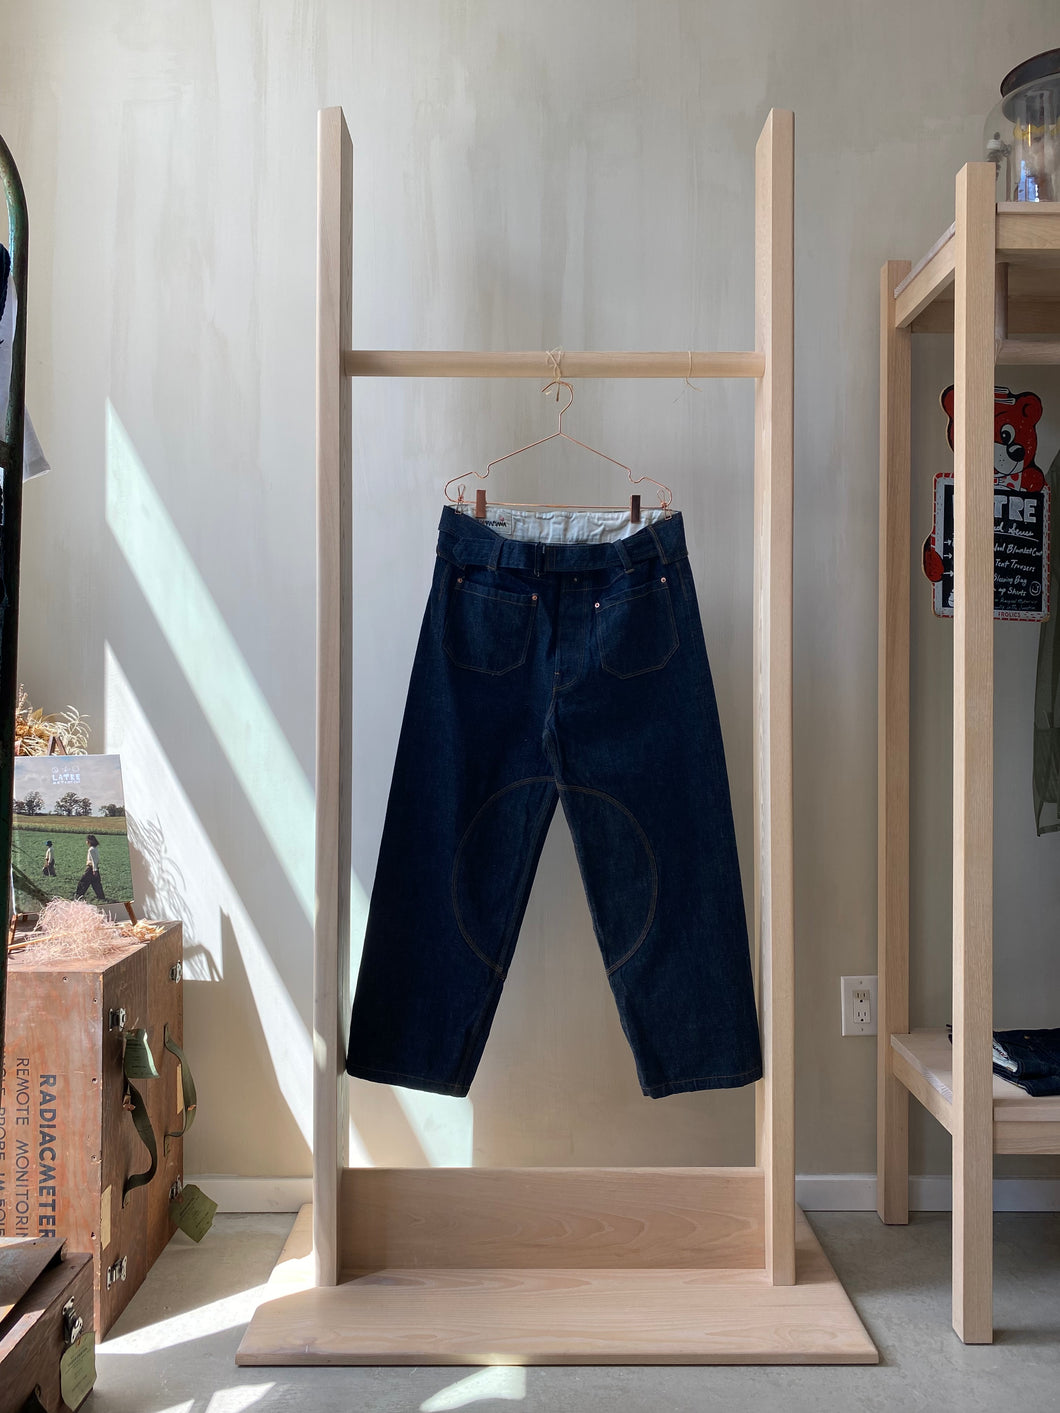 Latre x Viapiana Collab Japanese Indigo Denim Unisex Trousers